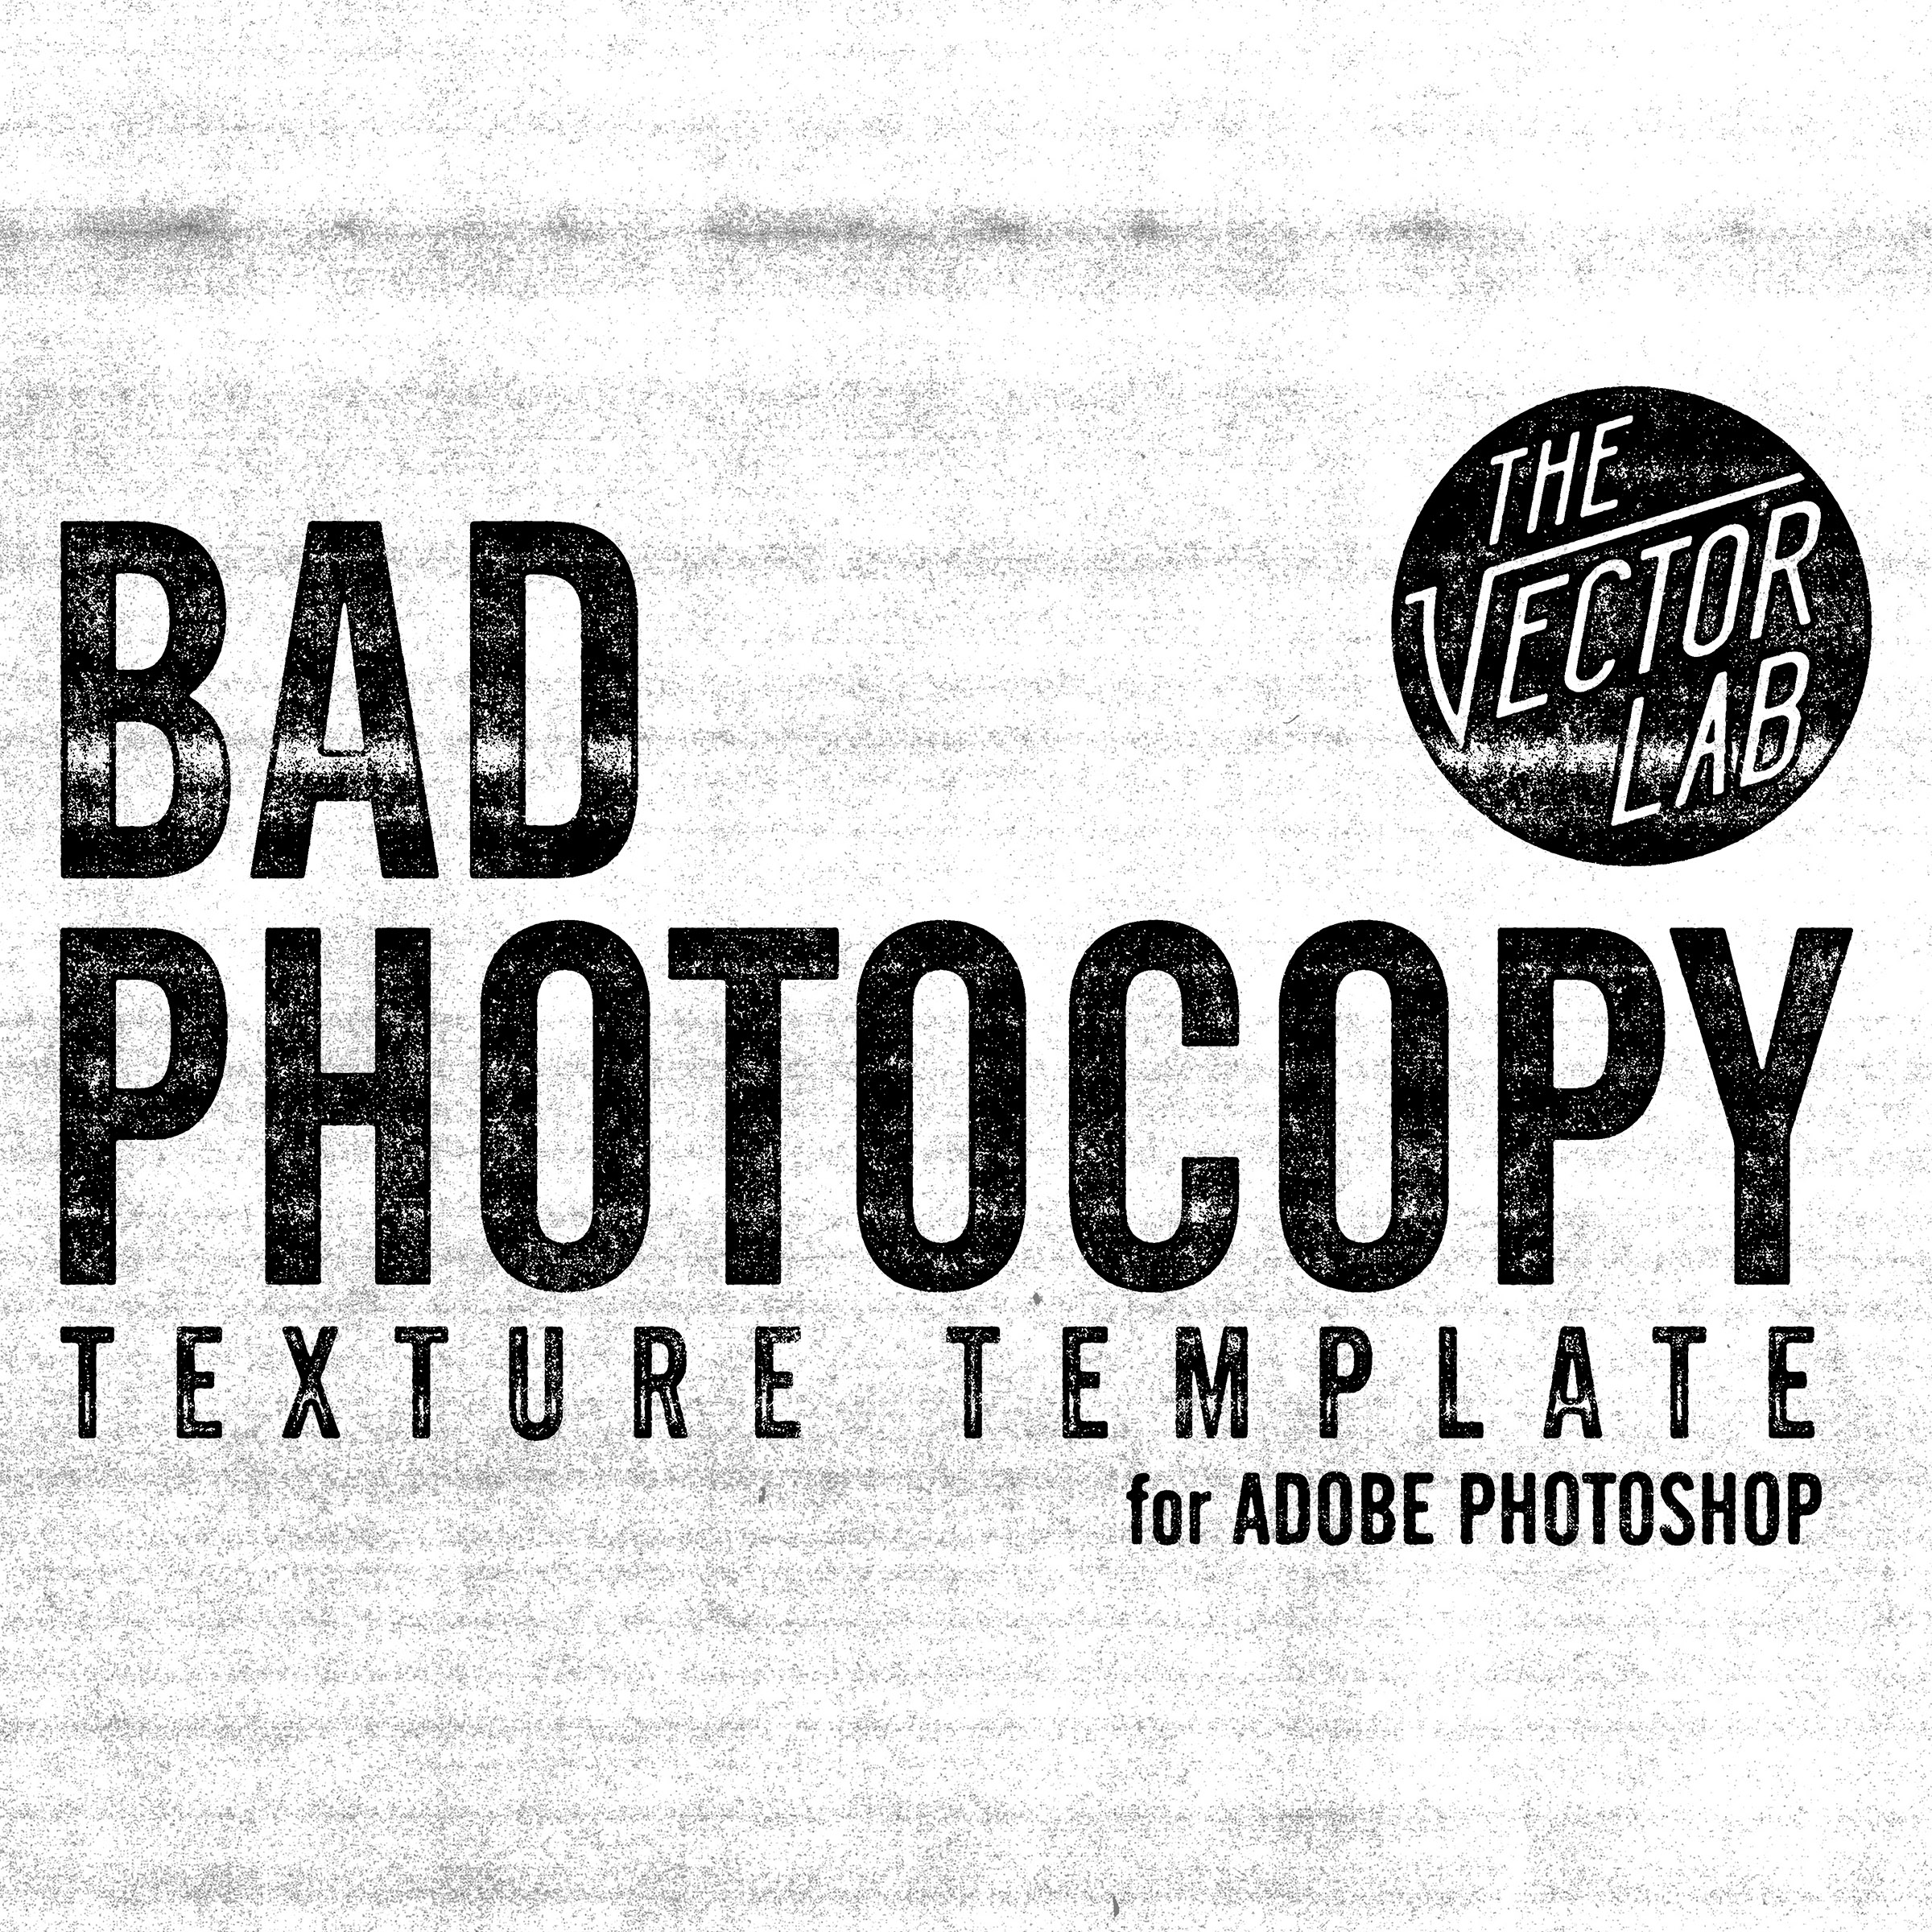 Bad Photocopy Texture Template - Photoshop